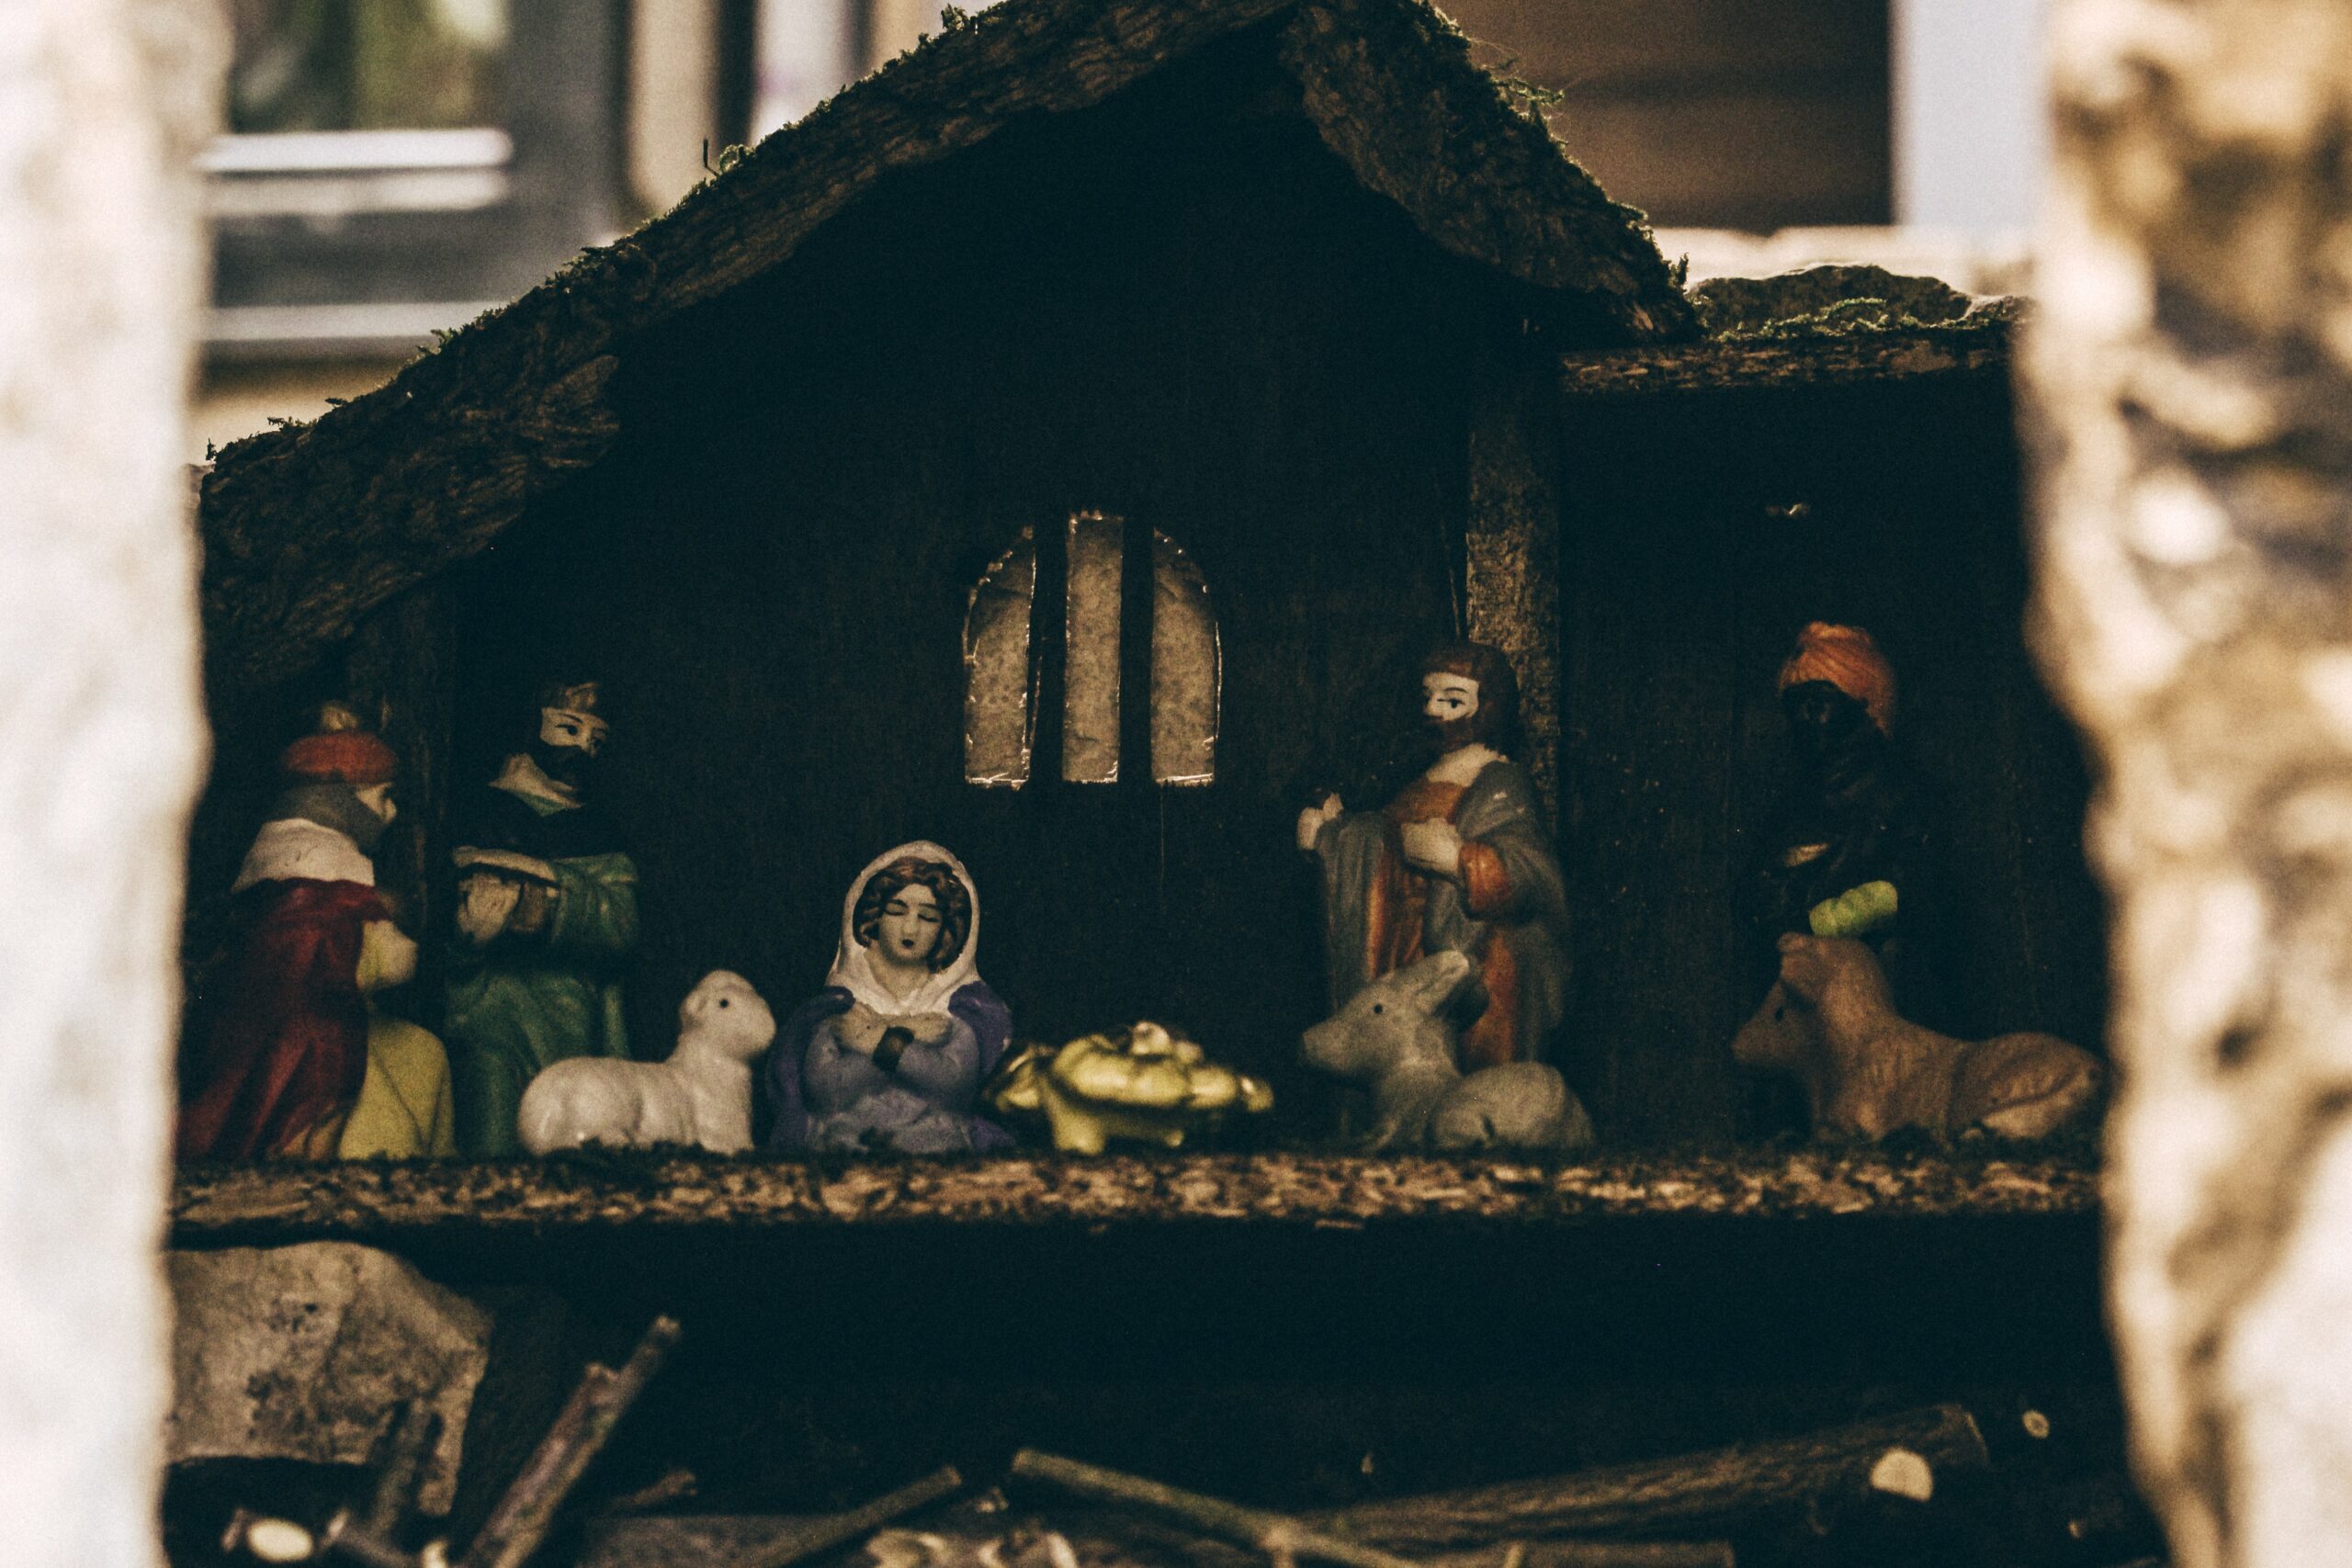 assorted-color nativity scene figurine